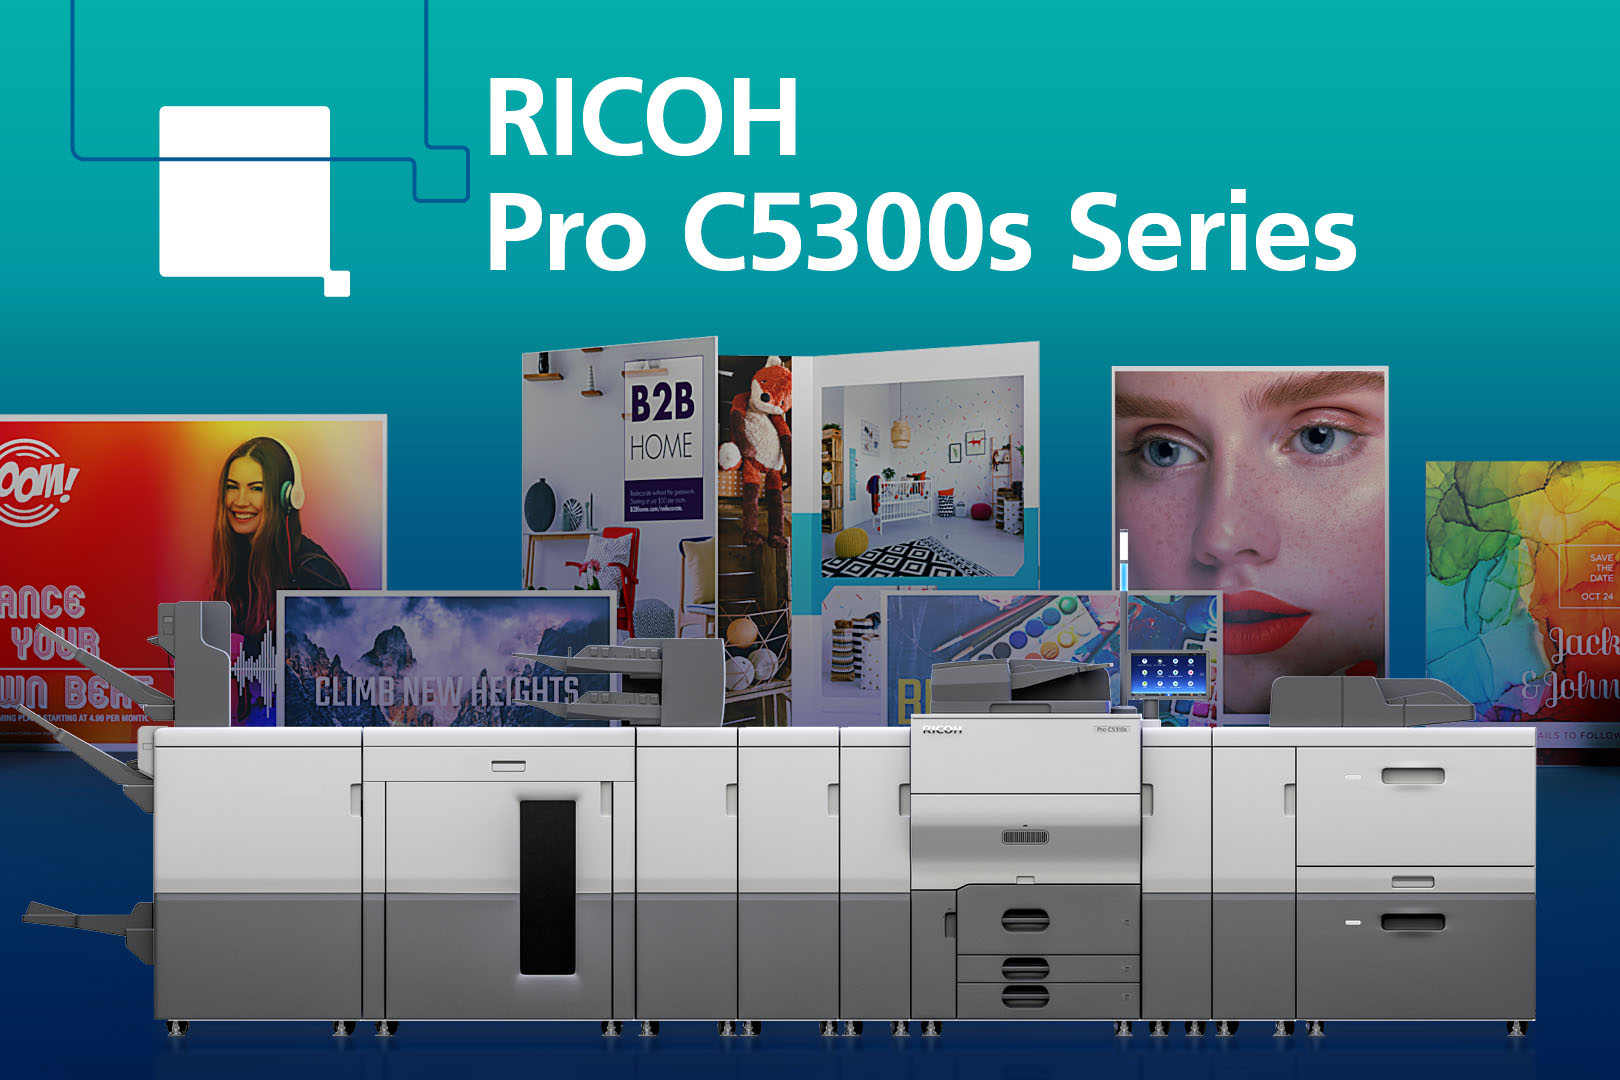 RICOH Pro C5300s Series, Ricoh USA